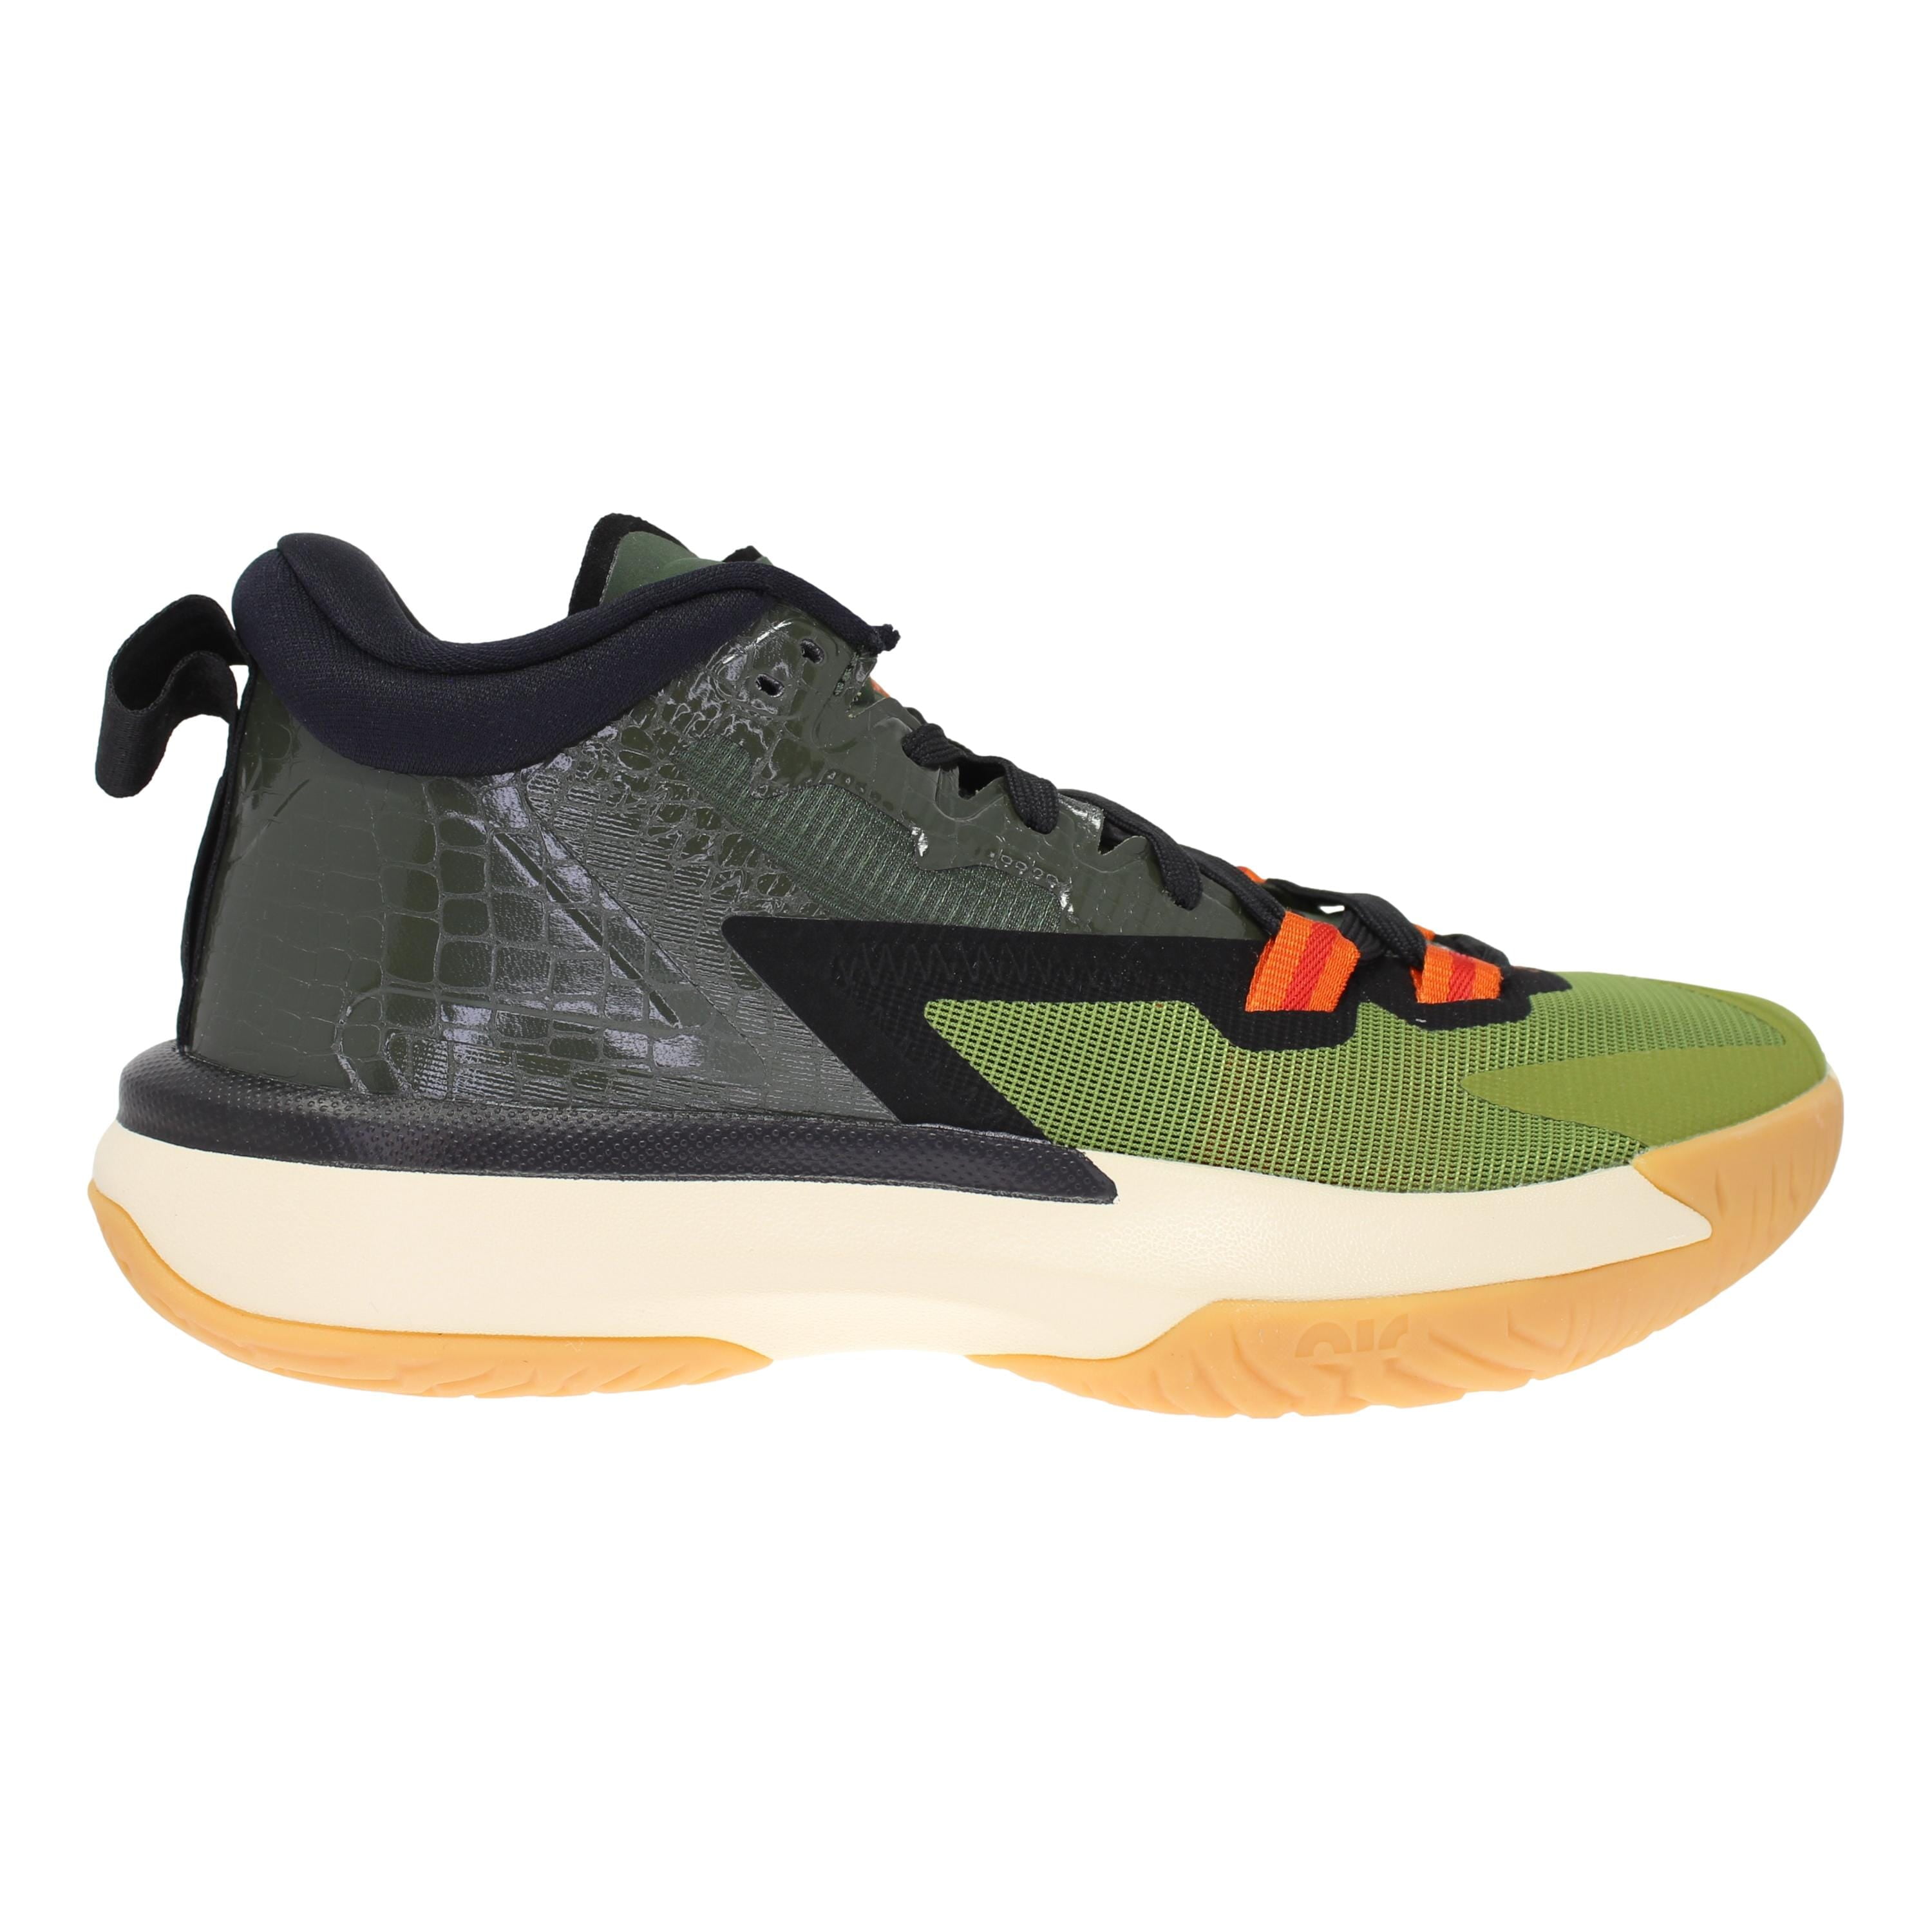 Nike Jordan Zion 1 Carbon Green/Black-Asparagus DA3131-300 Grade